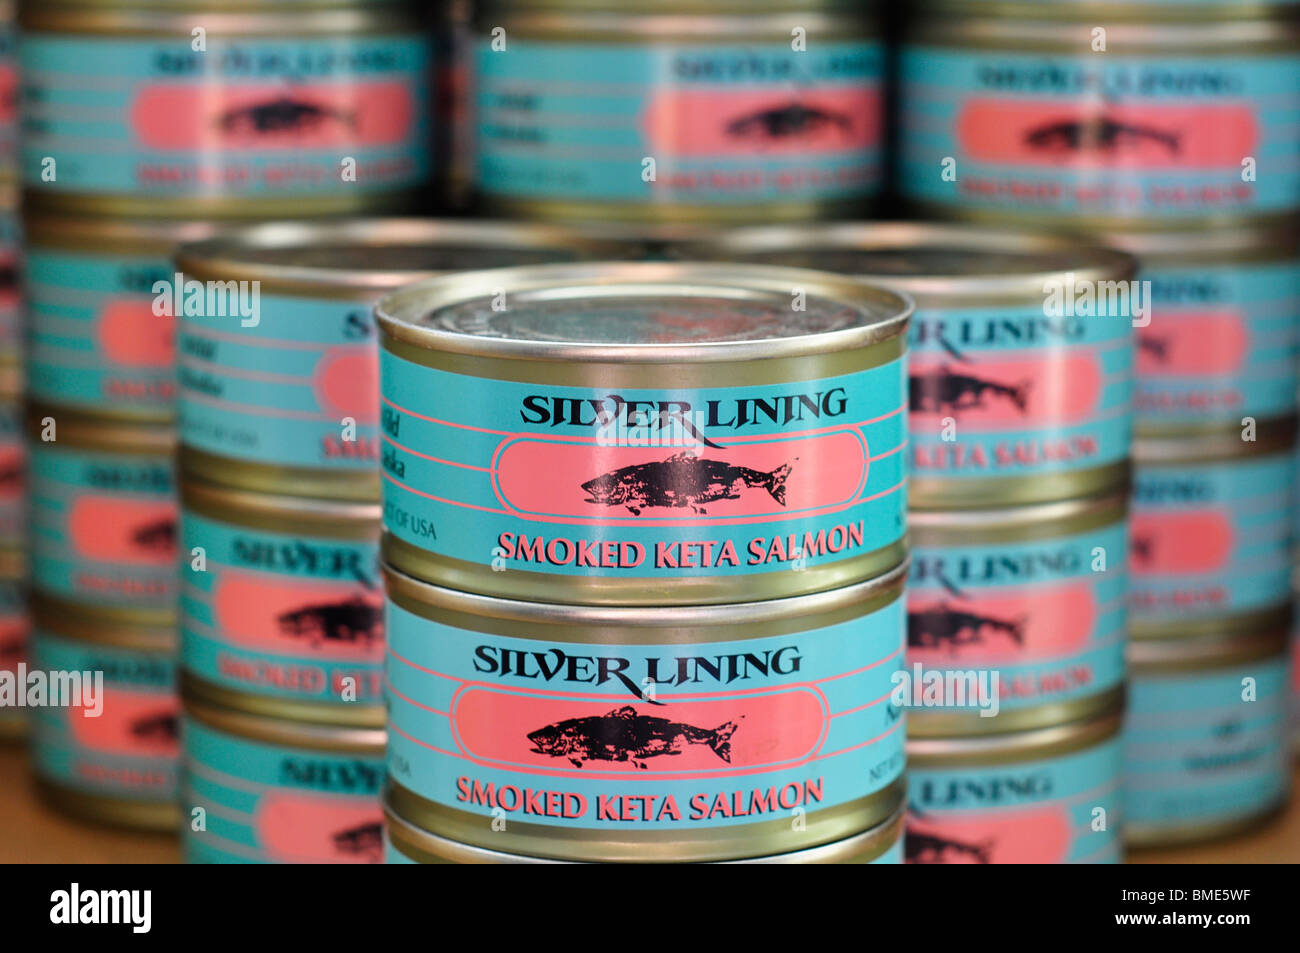 Tinned / Canned Keta Salmon Stock Photo